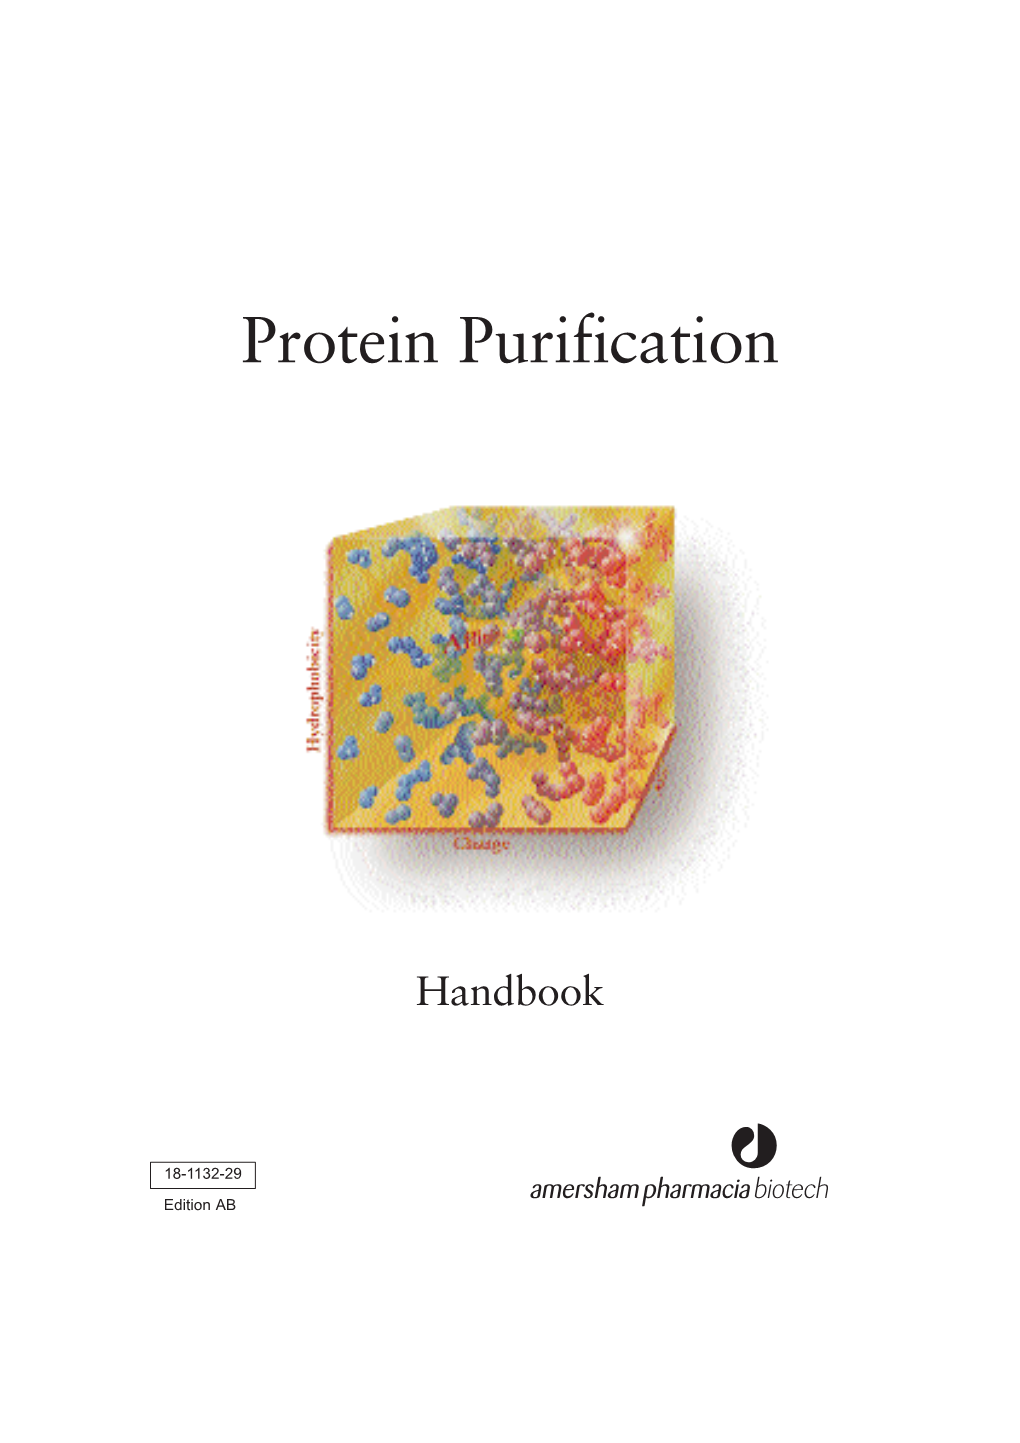 Protein Purification Handbook Printed in Sweden by Snits & Design AB / Graphium Västra Aros 9904 Printed in Sweden by Snits & Design AB / Graphium Västra Aros